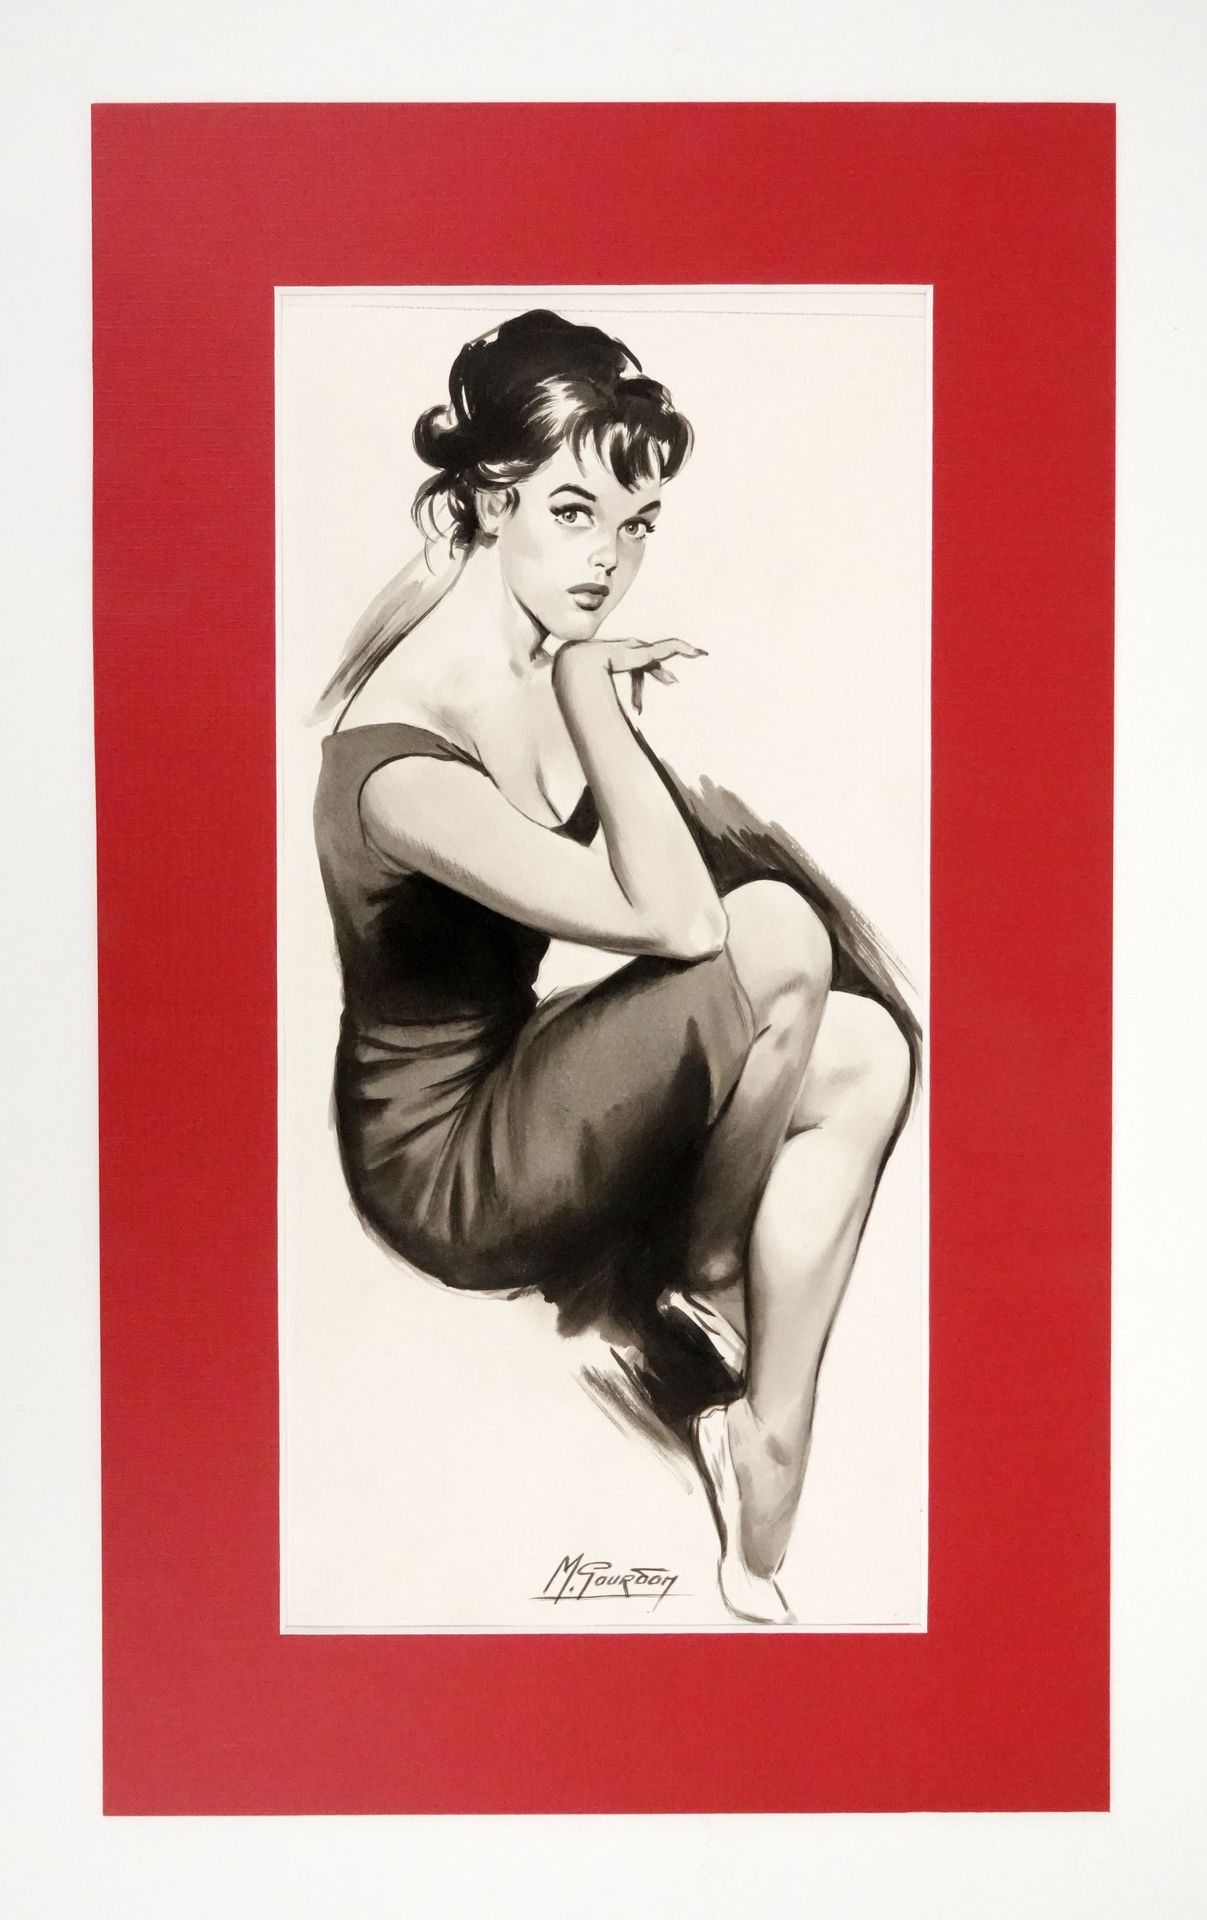 Null GOURDON Michel
代表一个女人的插图
铅笔、印度水墨，底部中央有签名
37 x 27 cm